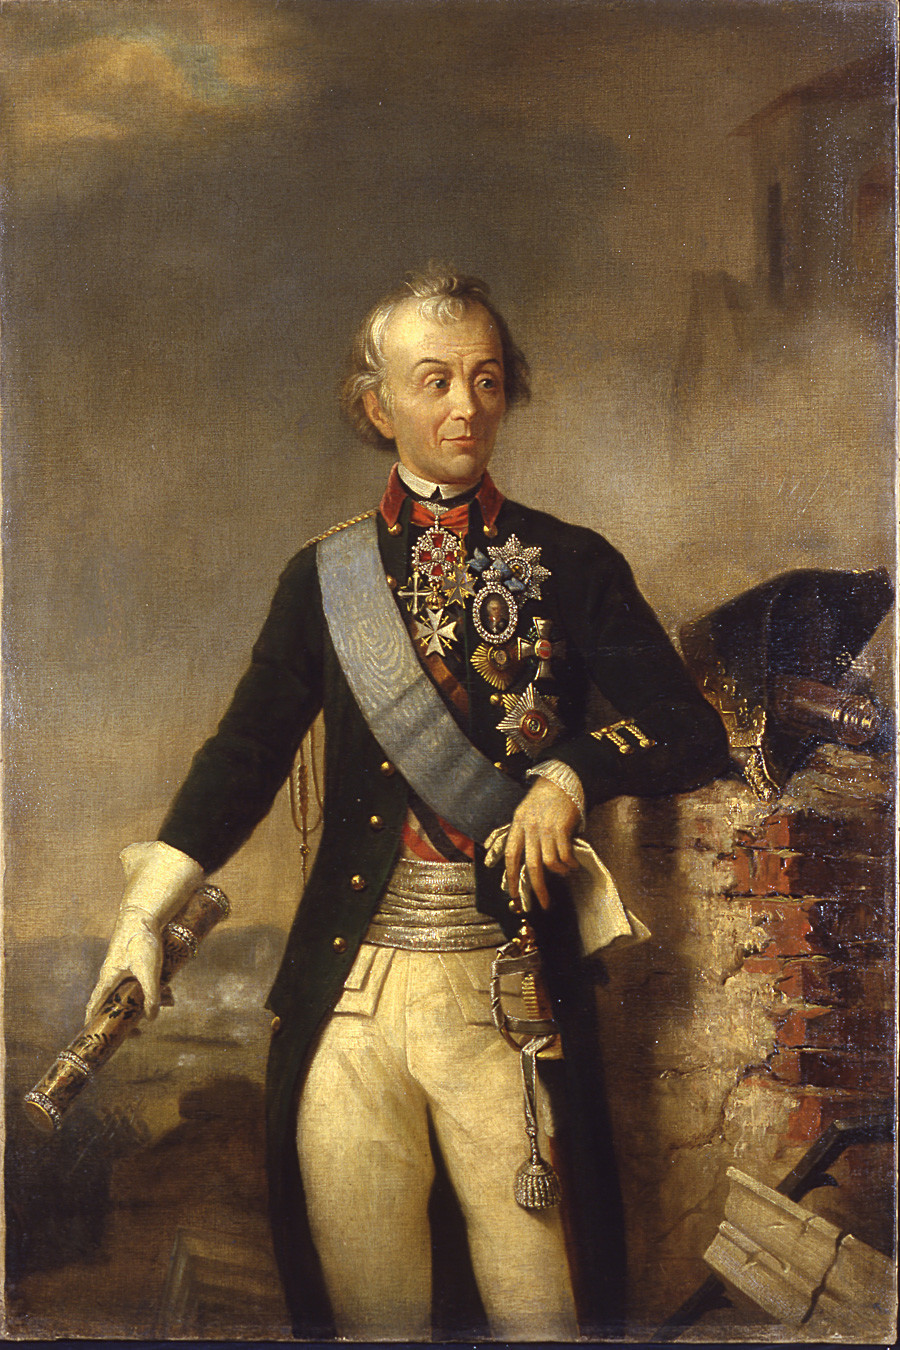 Aleksandr Vassiliévitch Suvorov de Rimnik, príncipe da Itália 1729–1800)
